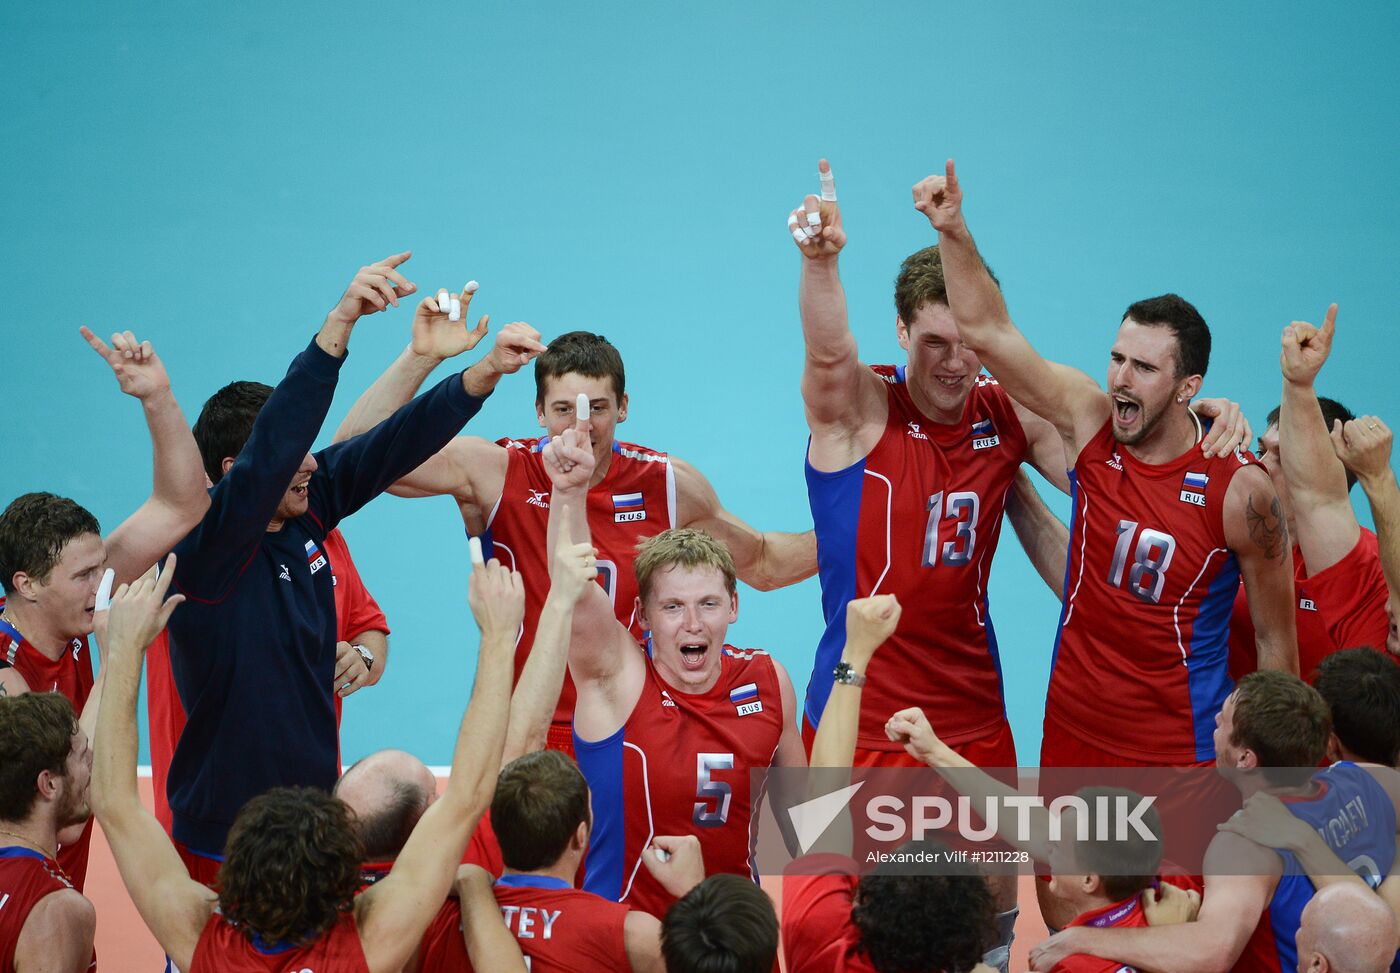 London 2012 Olympics. Men's Volleyball. Russia vs. Brazil